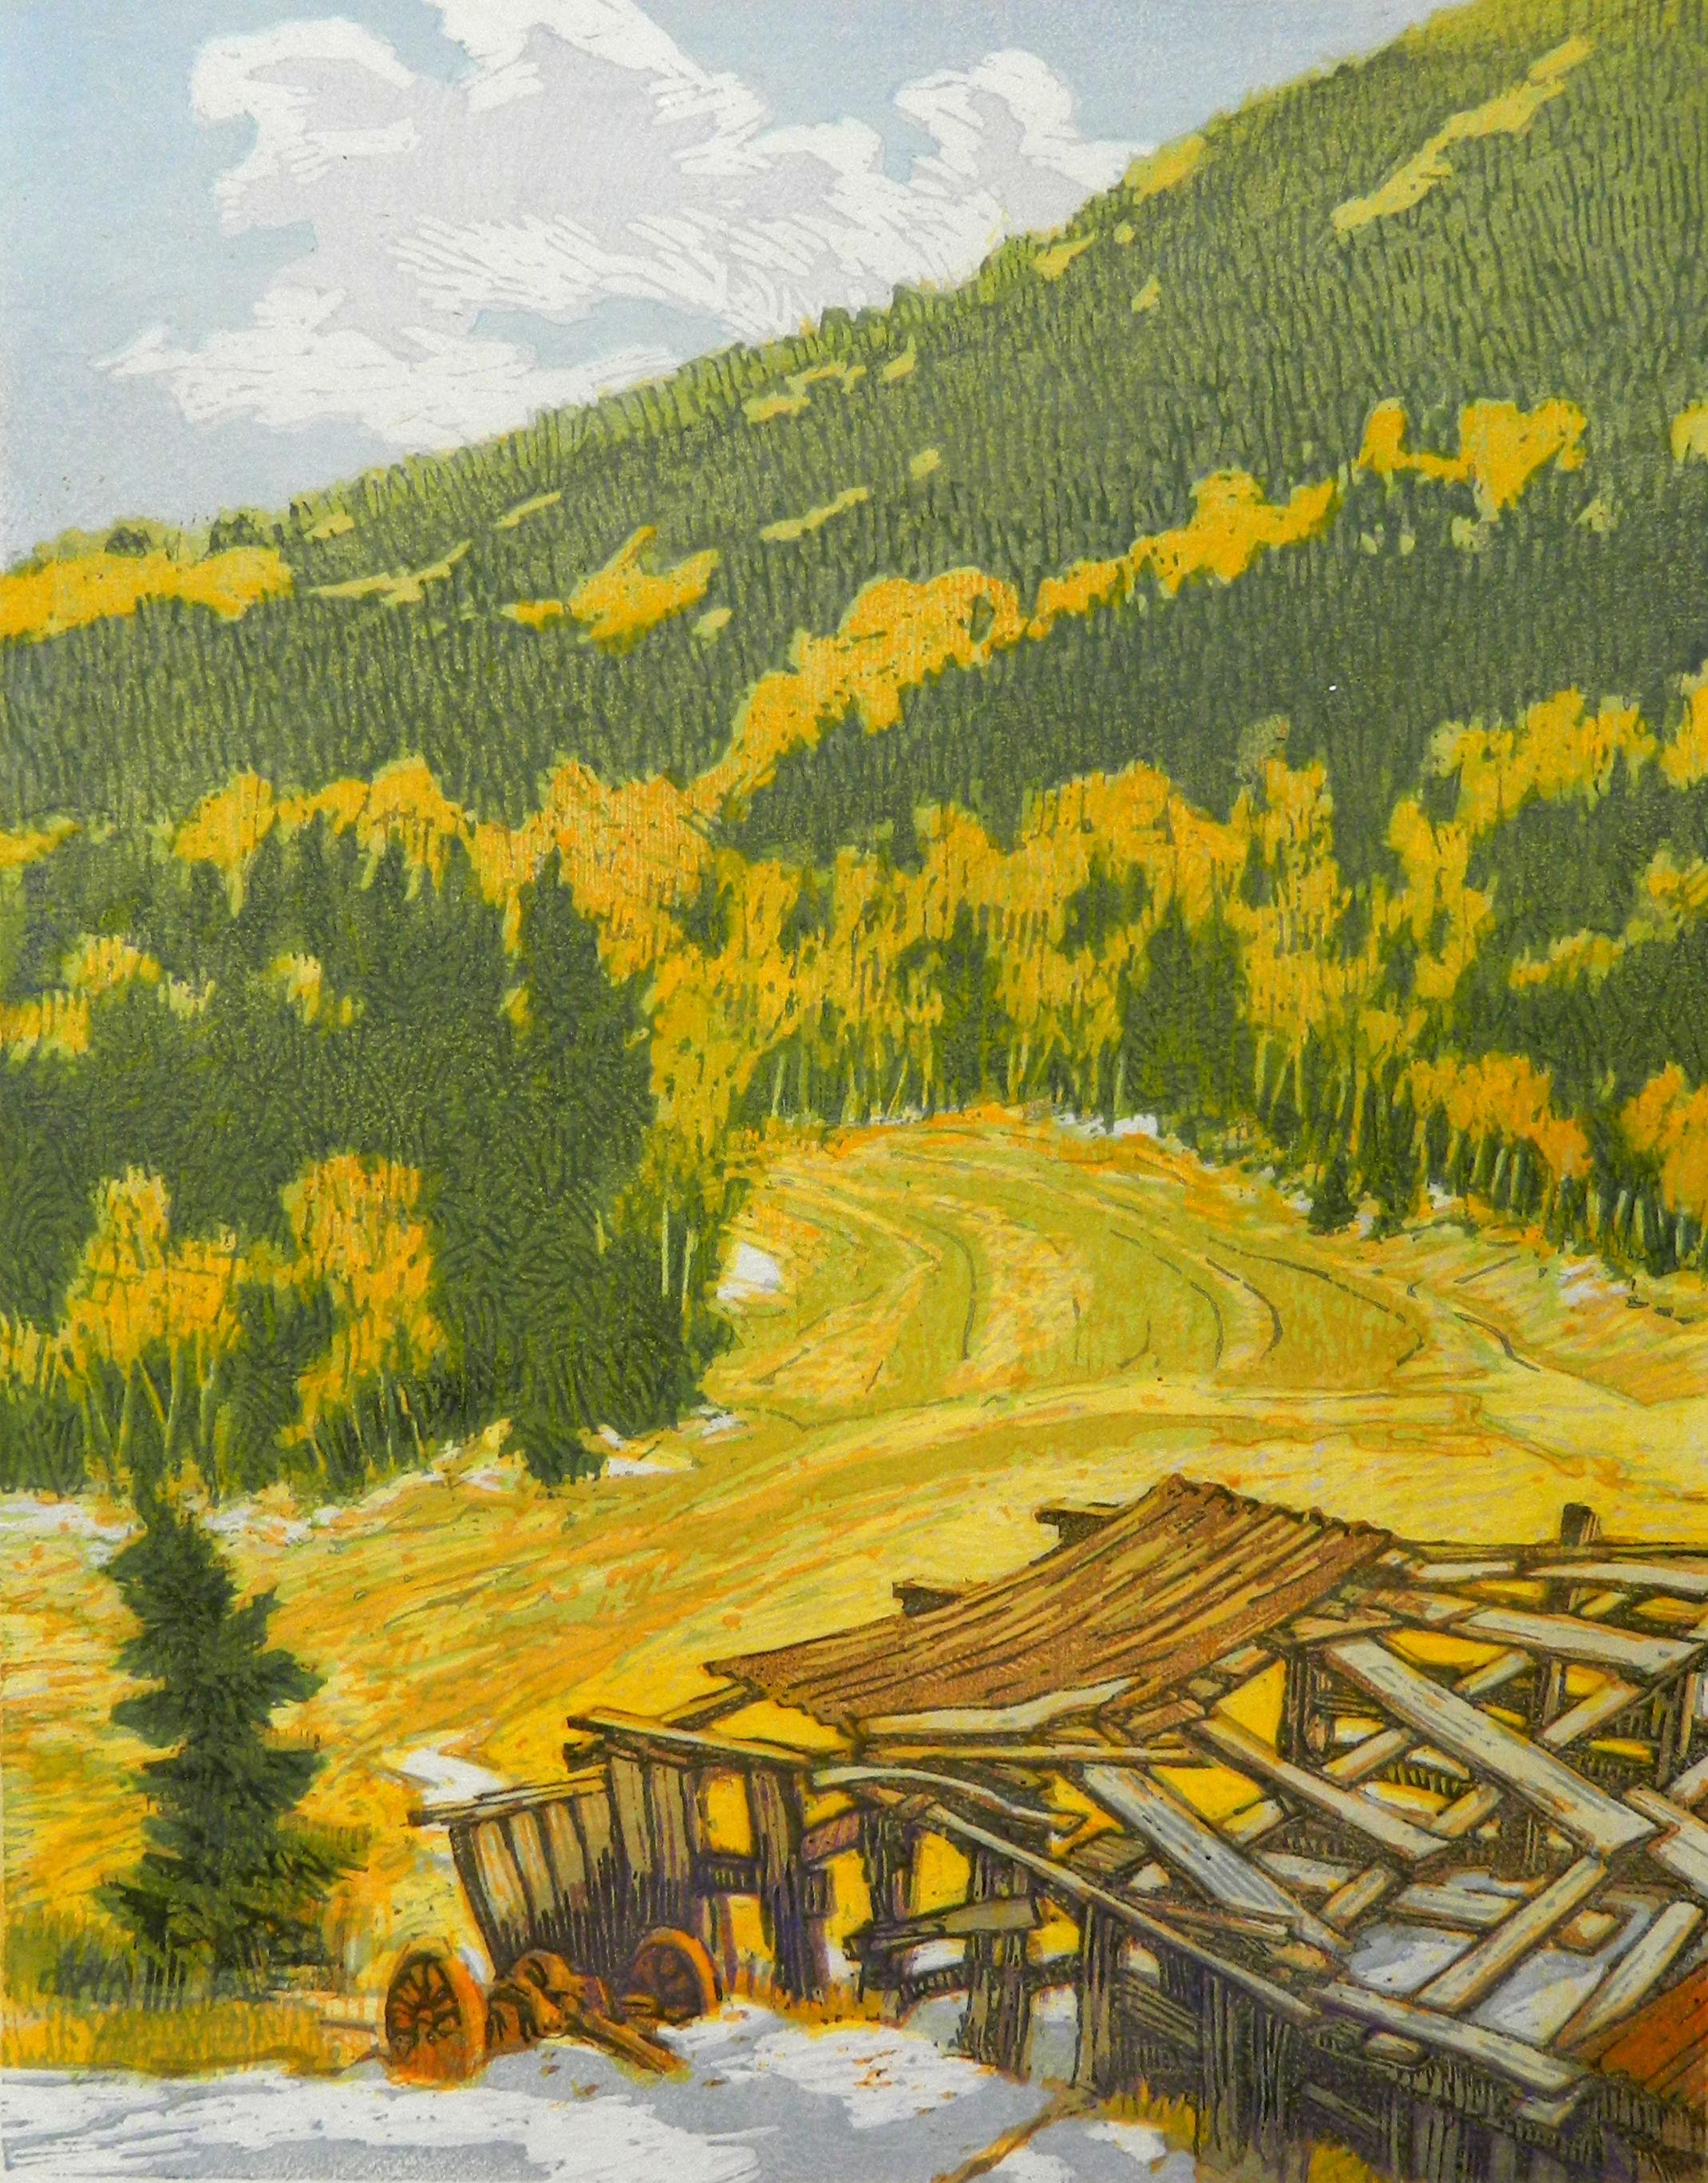 Leon Loughridge Landscape Print - Passing Time 6/12 (Woodblock print of Western Colorado mountain landscape.)